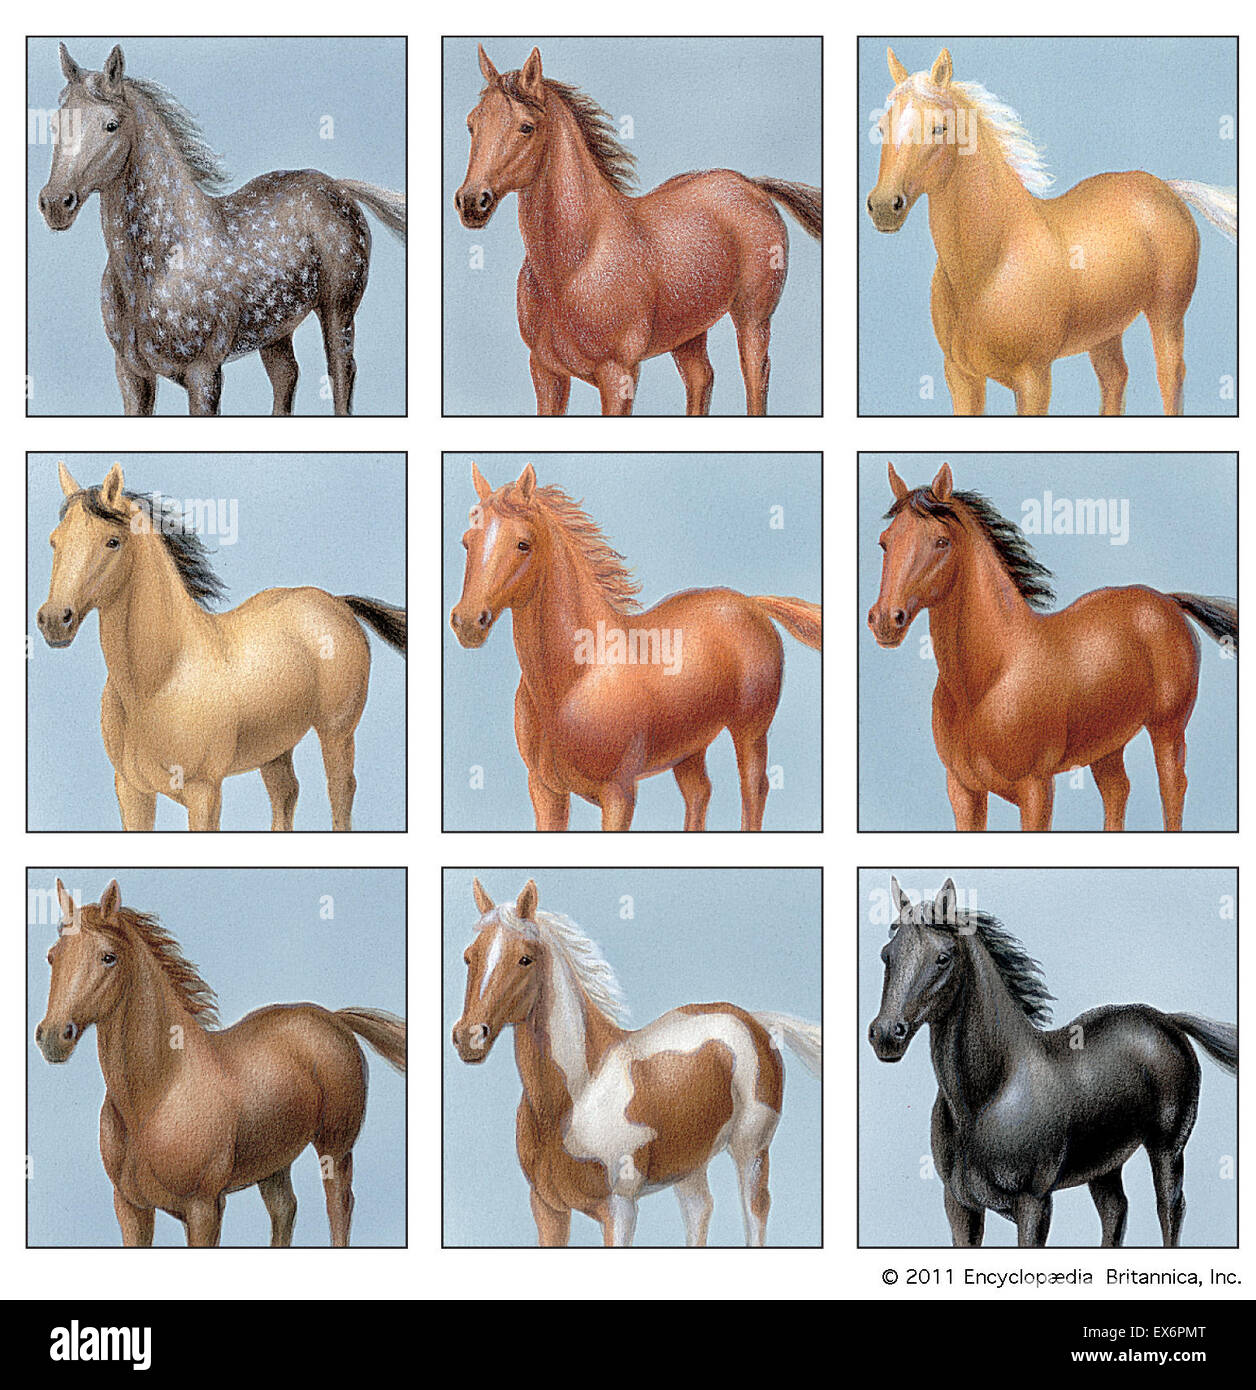 Colores de caballos comunes Fotografía de stock - Alamy